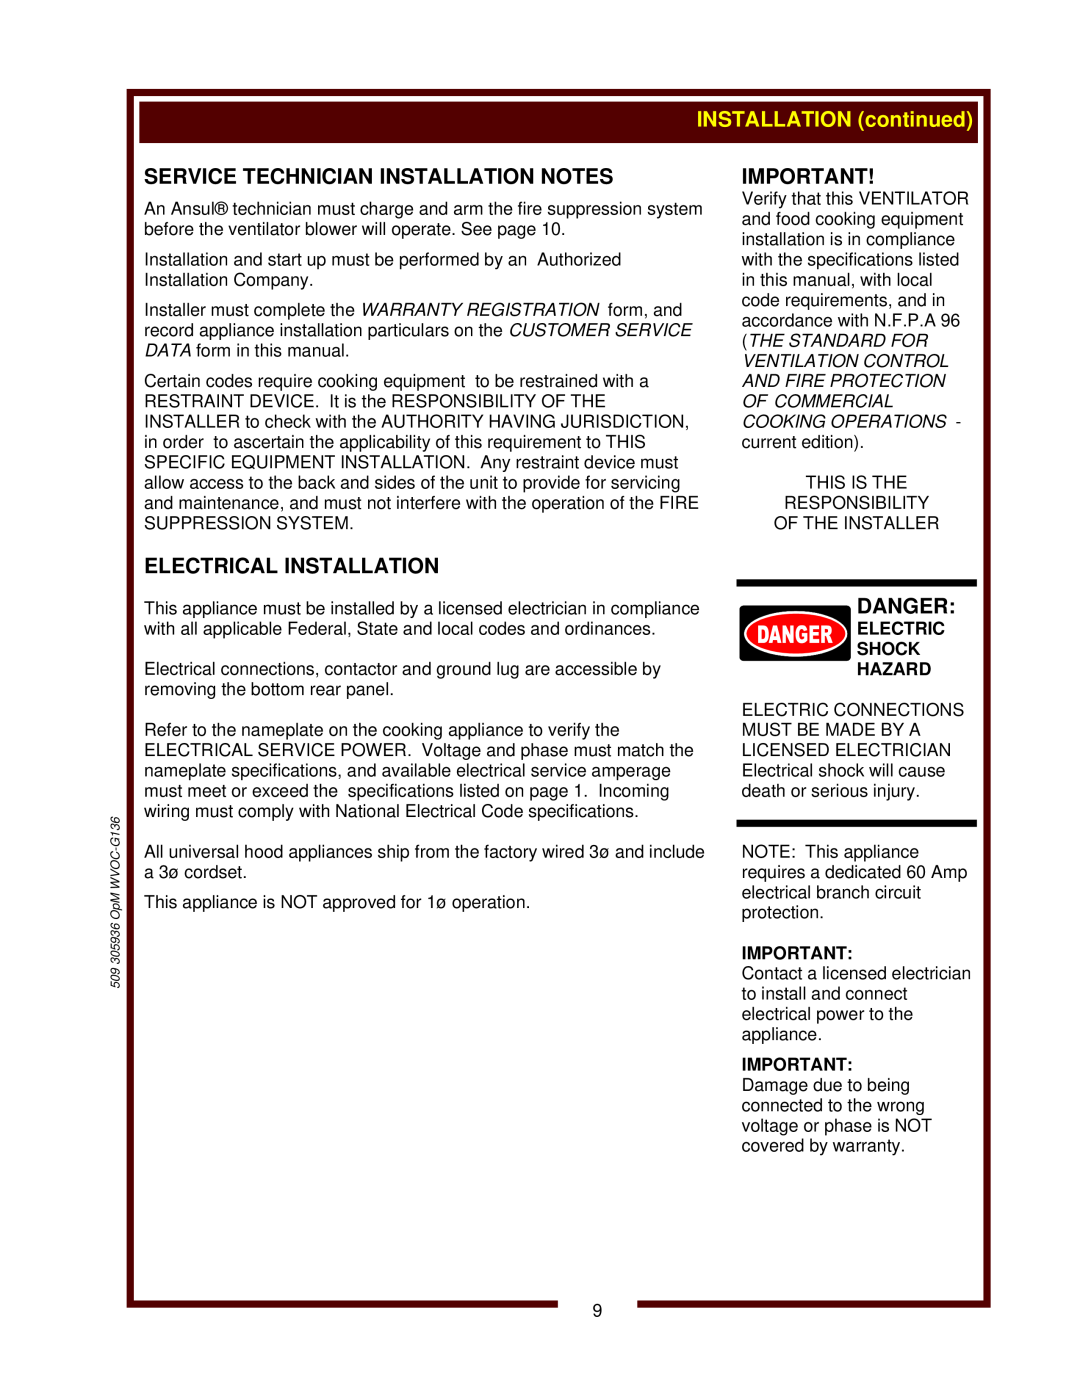 Wells operation manual 509 305936 OpM WVOC-G136 